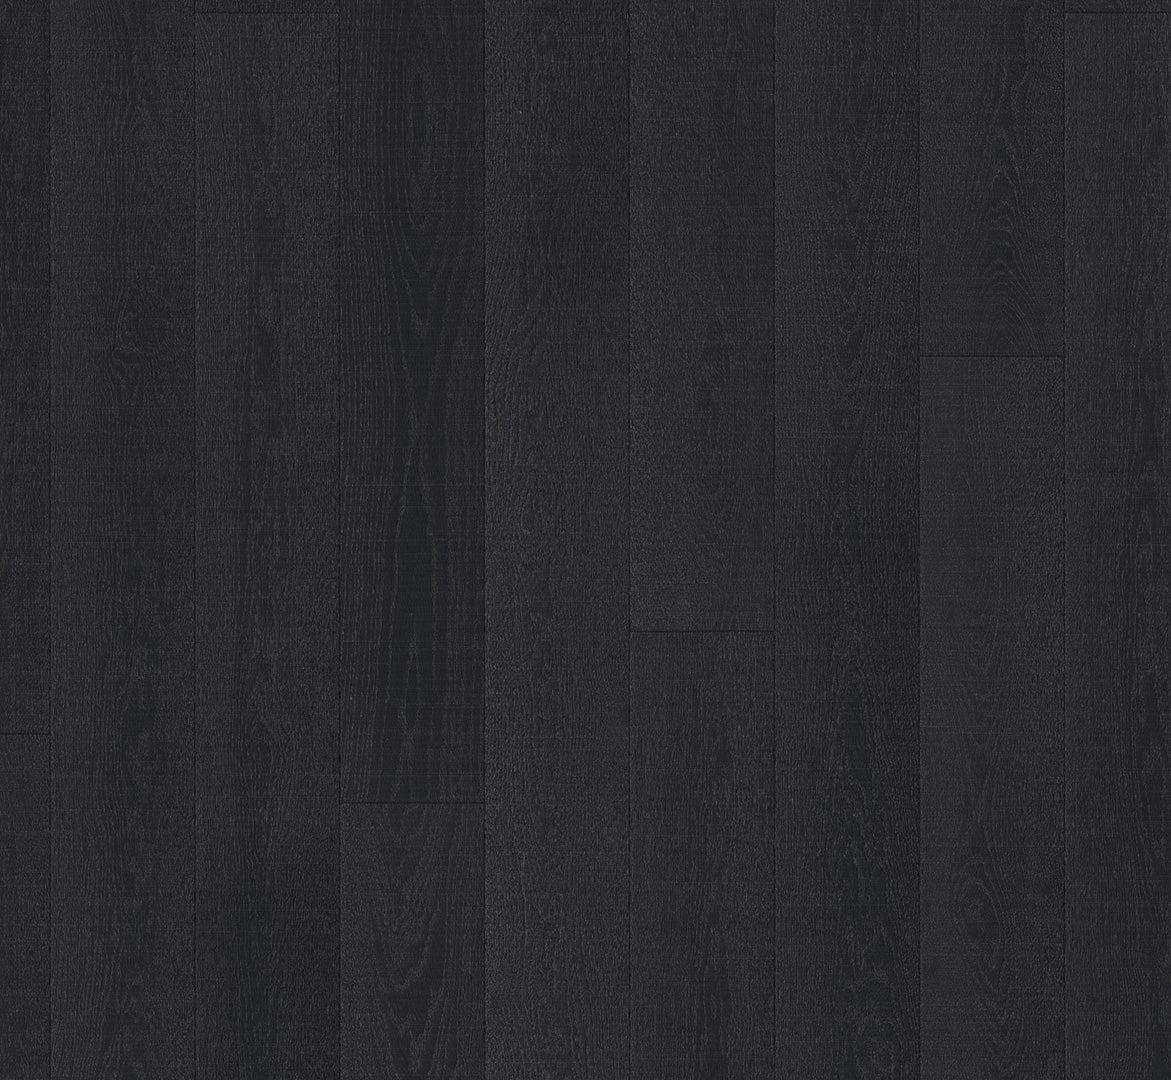 Oak noir sawn texture